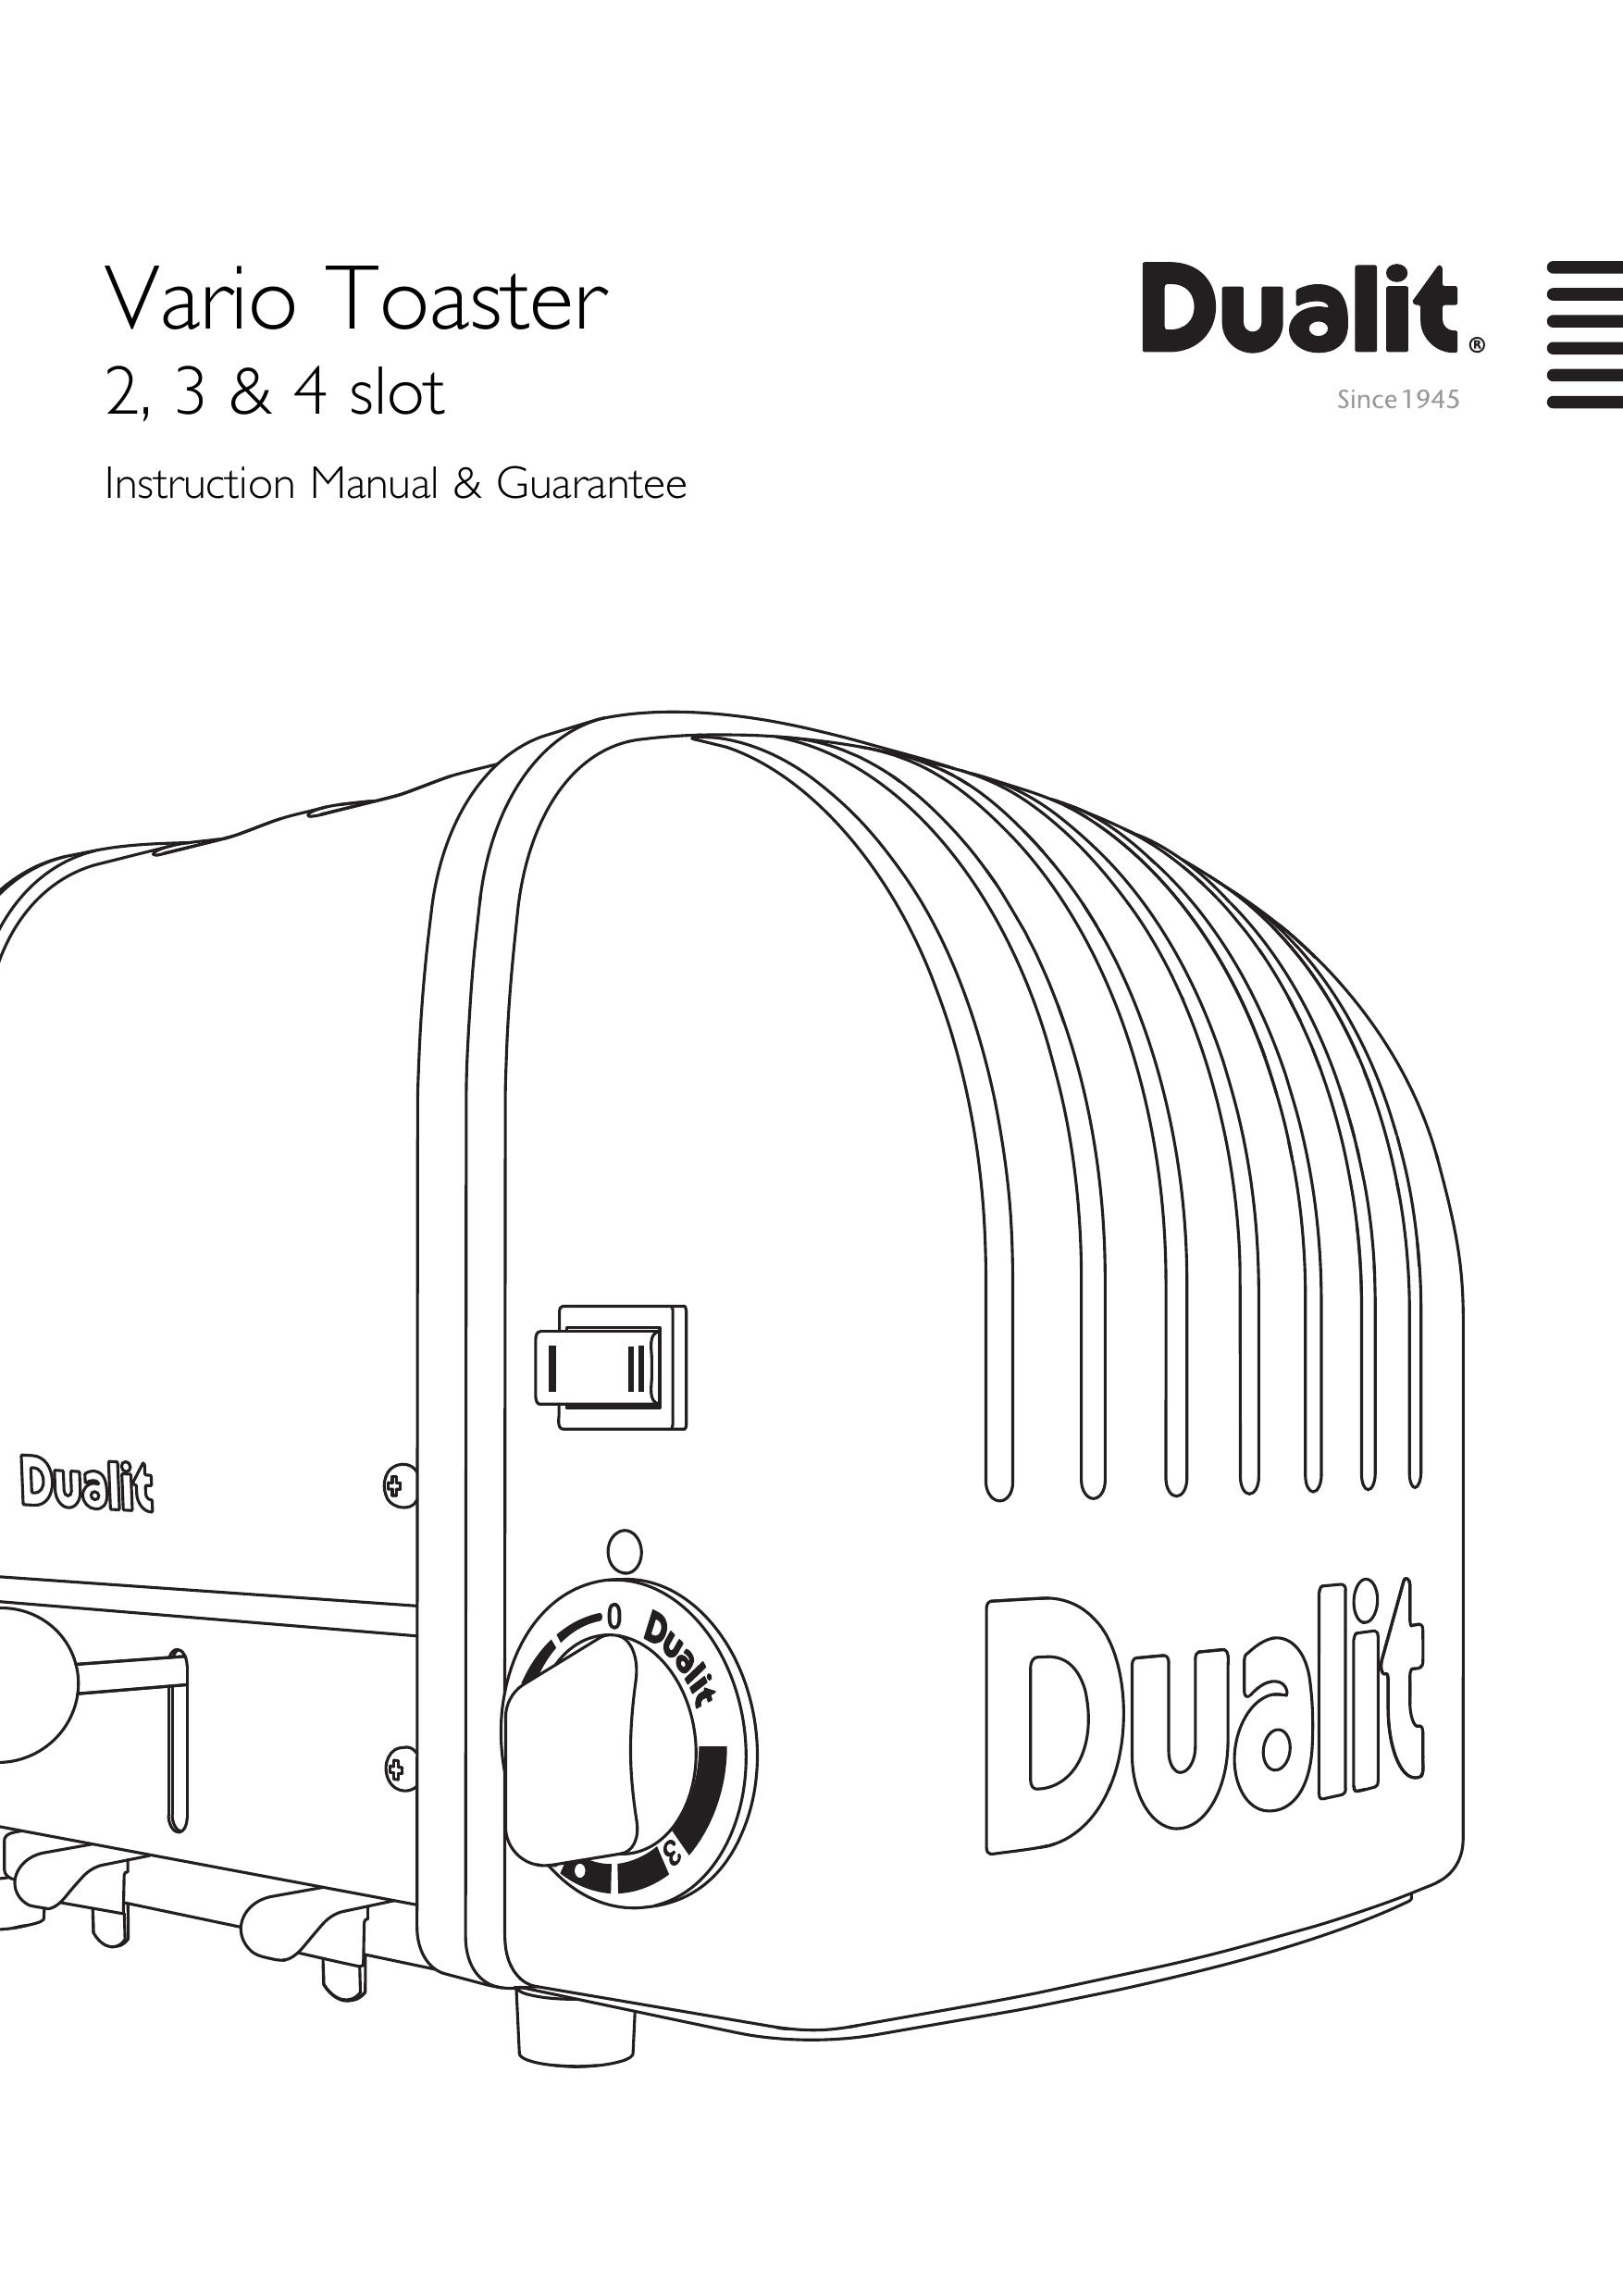 Dualit 20316 Toaster User Manual